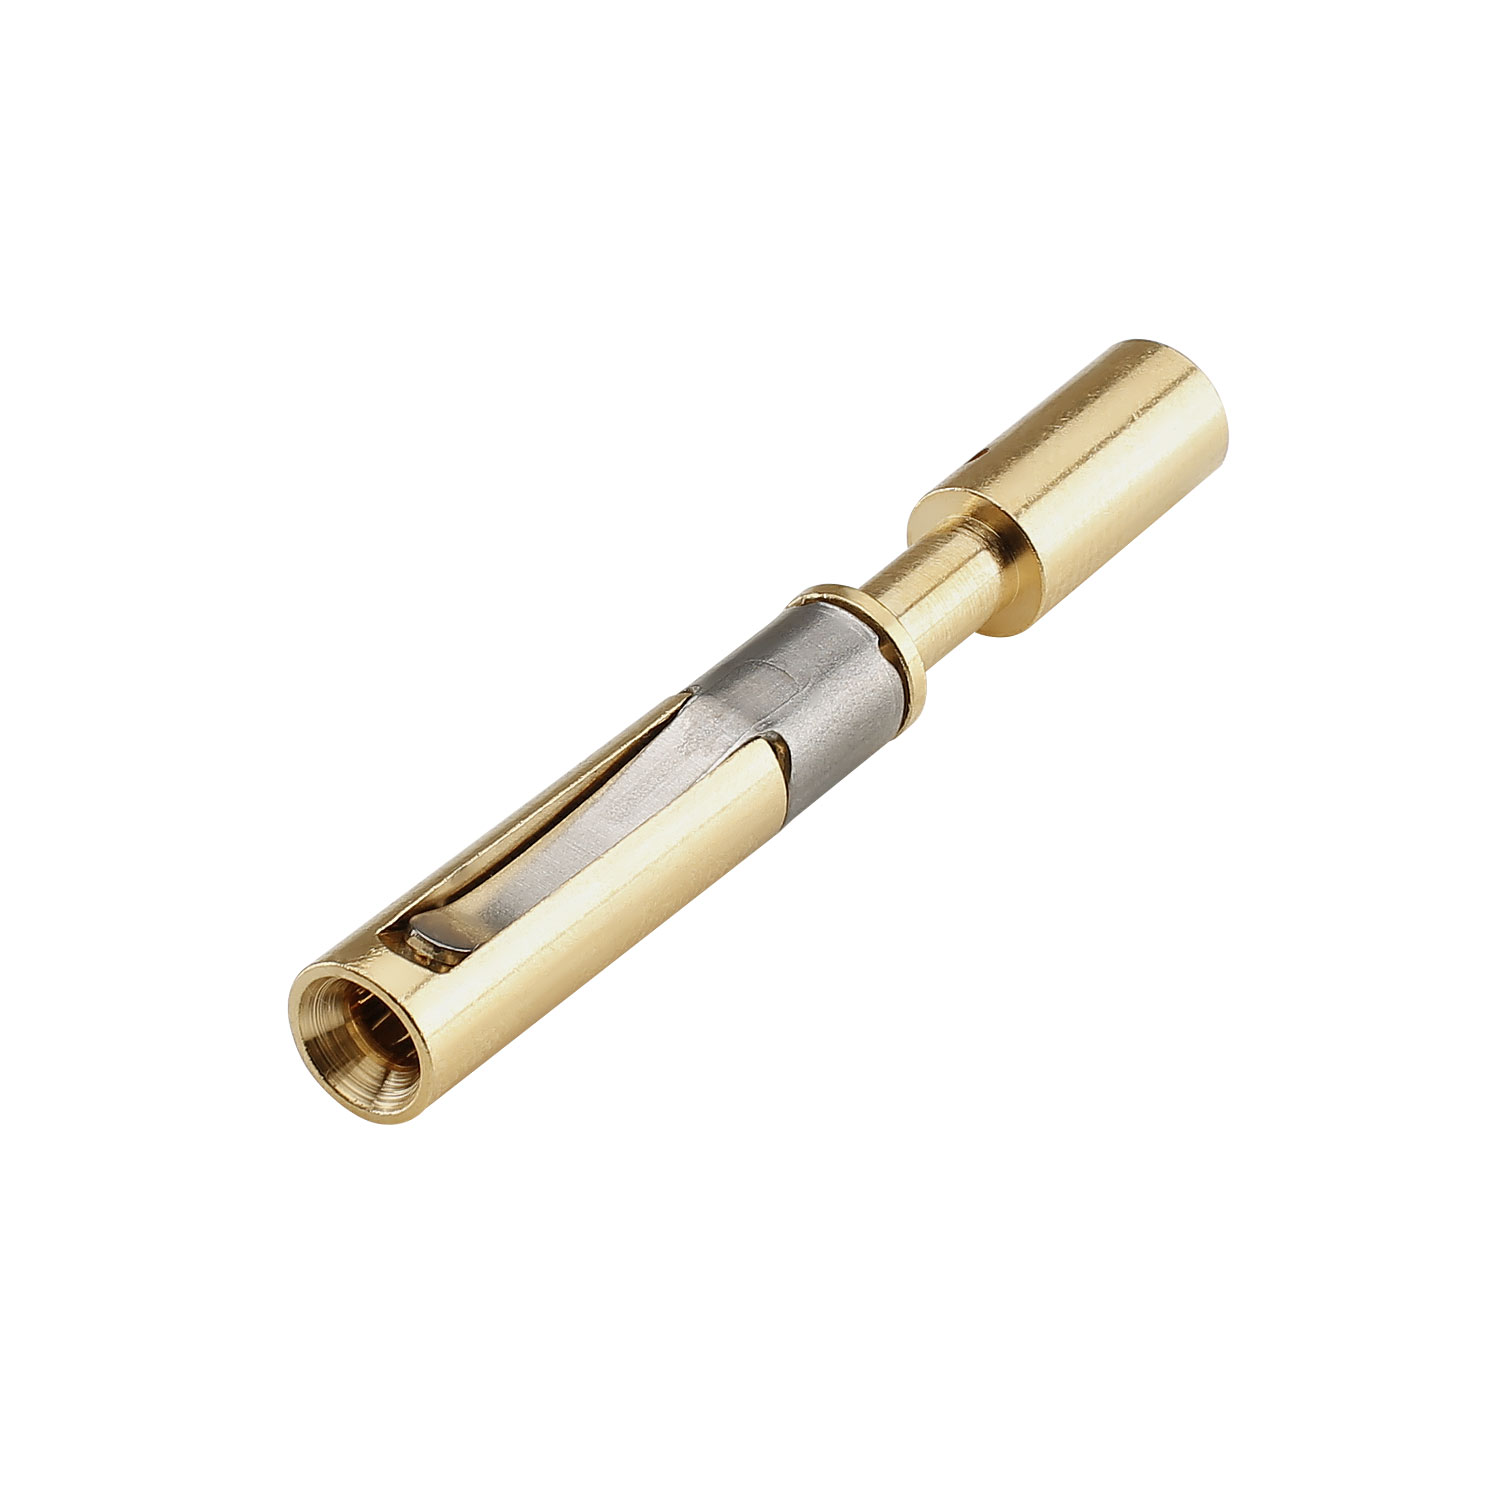 HICON Crimp Contact socket, crimp-, gold plated contact(s), max. 4 mm², for HI-LK008